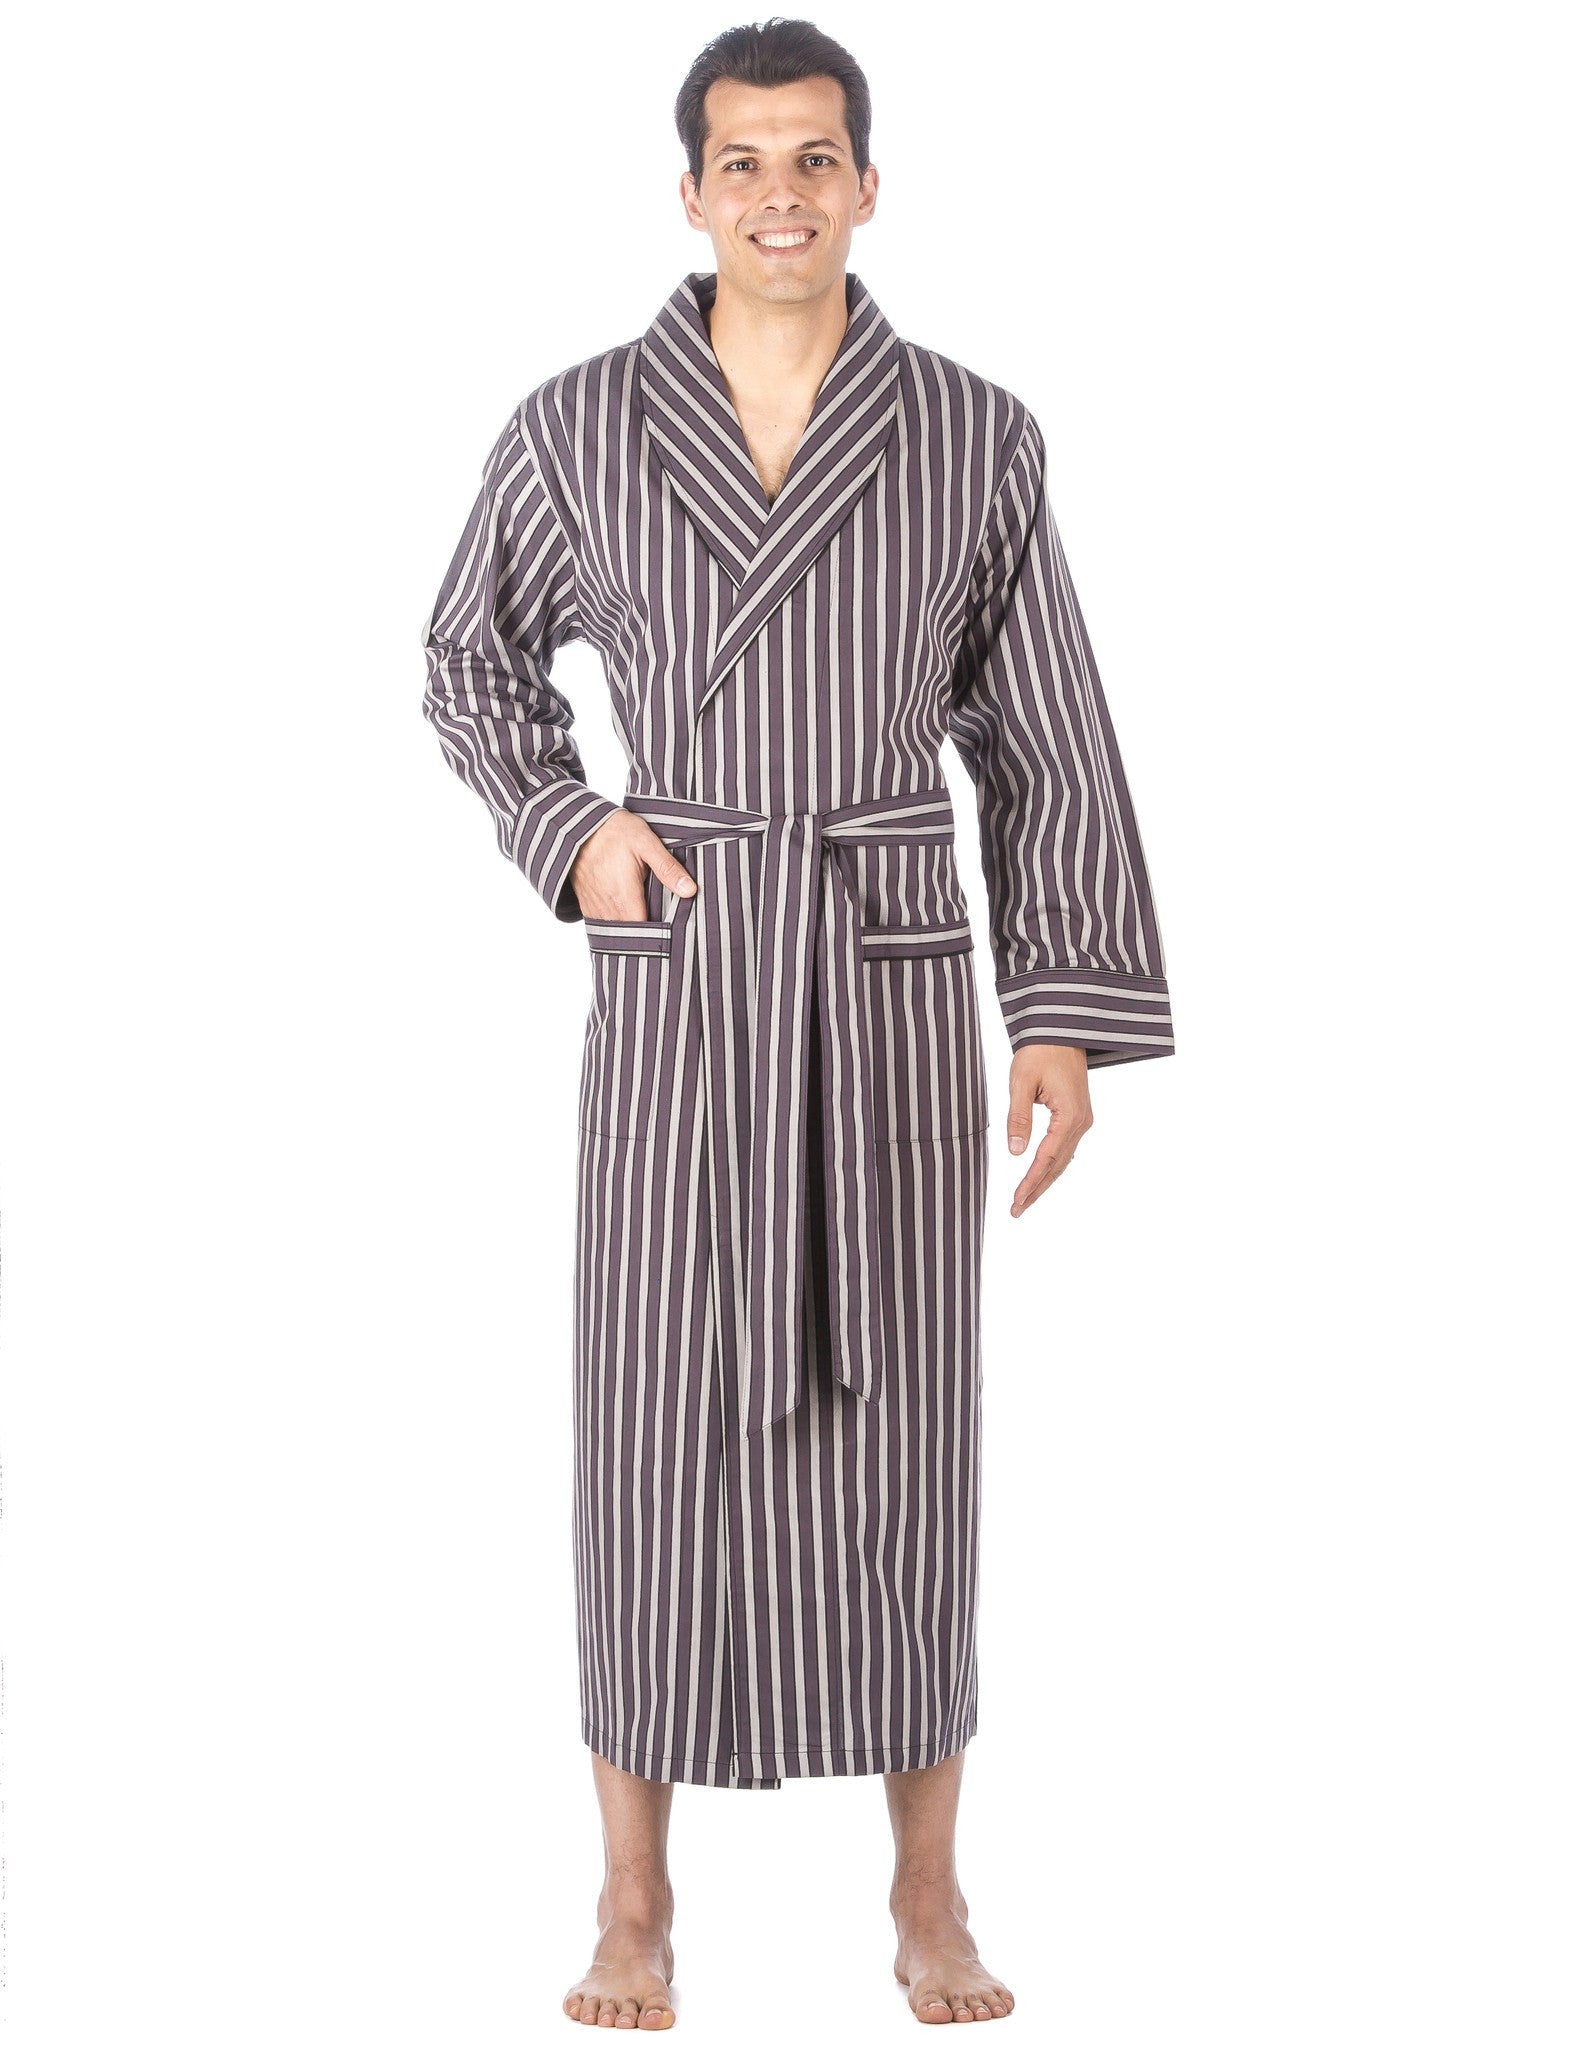 Men's Premium 100% Cotton Full-Length Robe